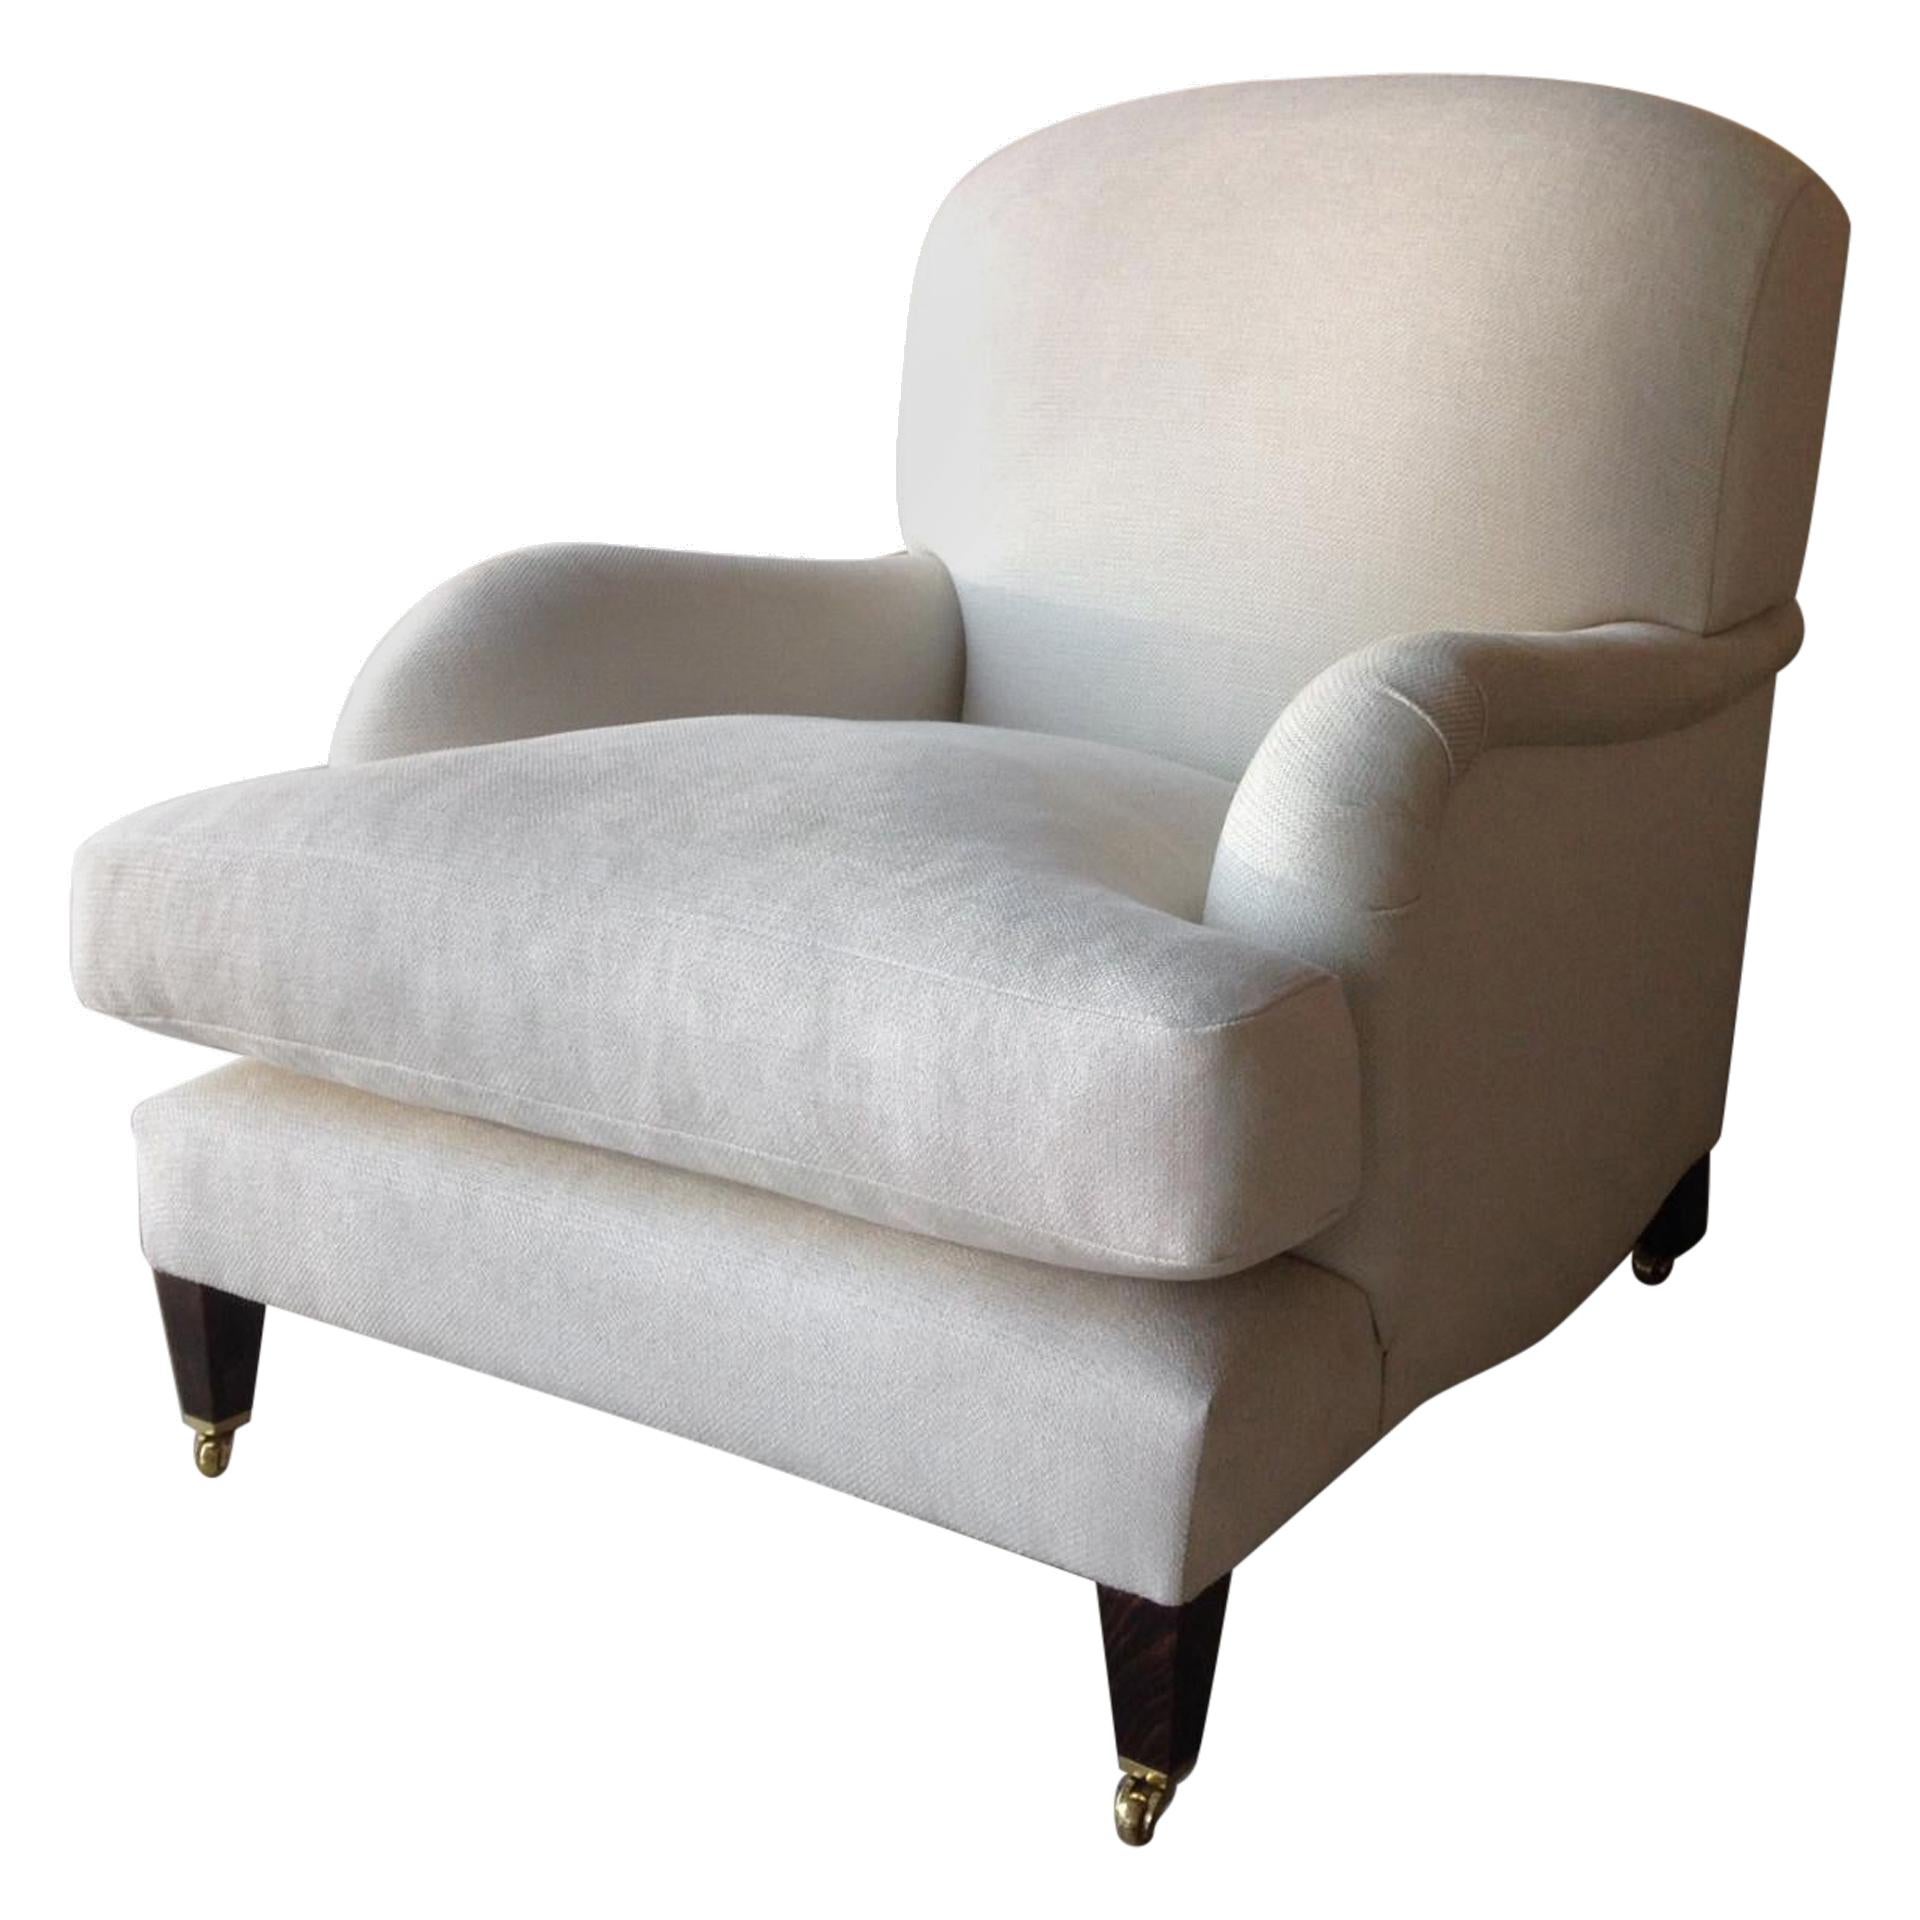 The Howard, fauteuil en lin belge fabriqué sur mesure en vente